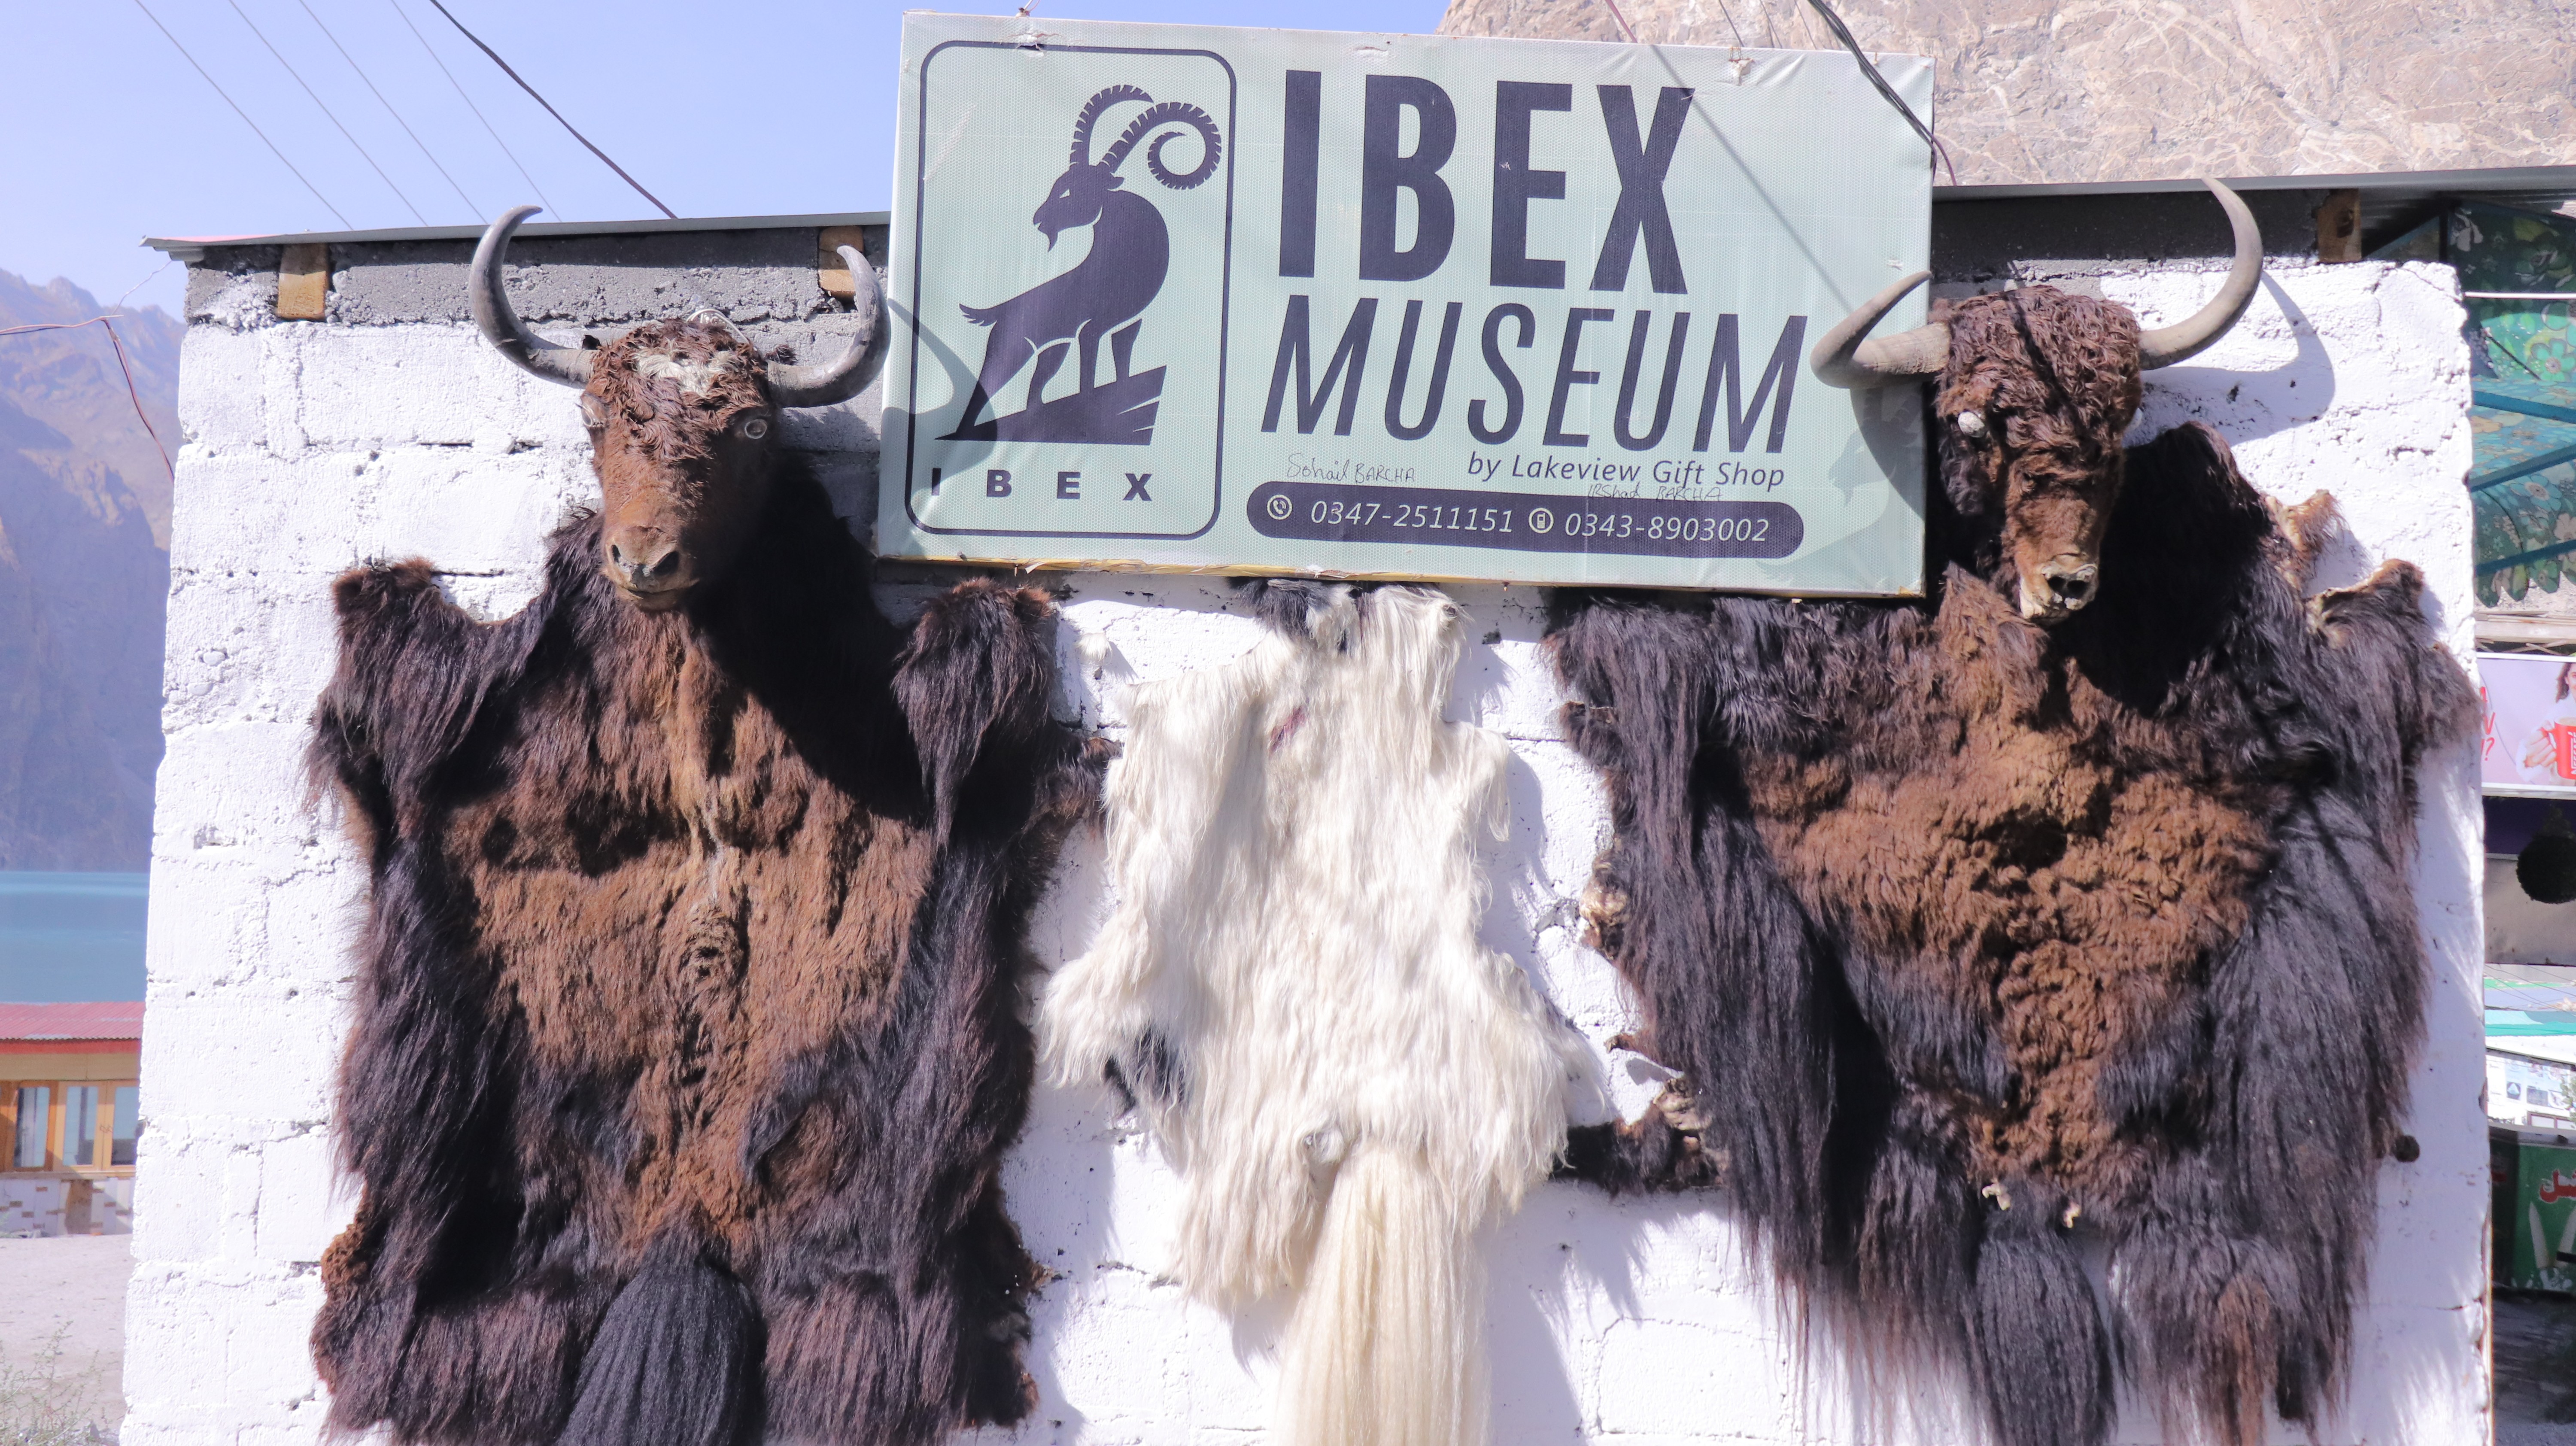 The Ibex Museum